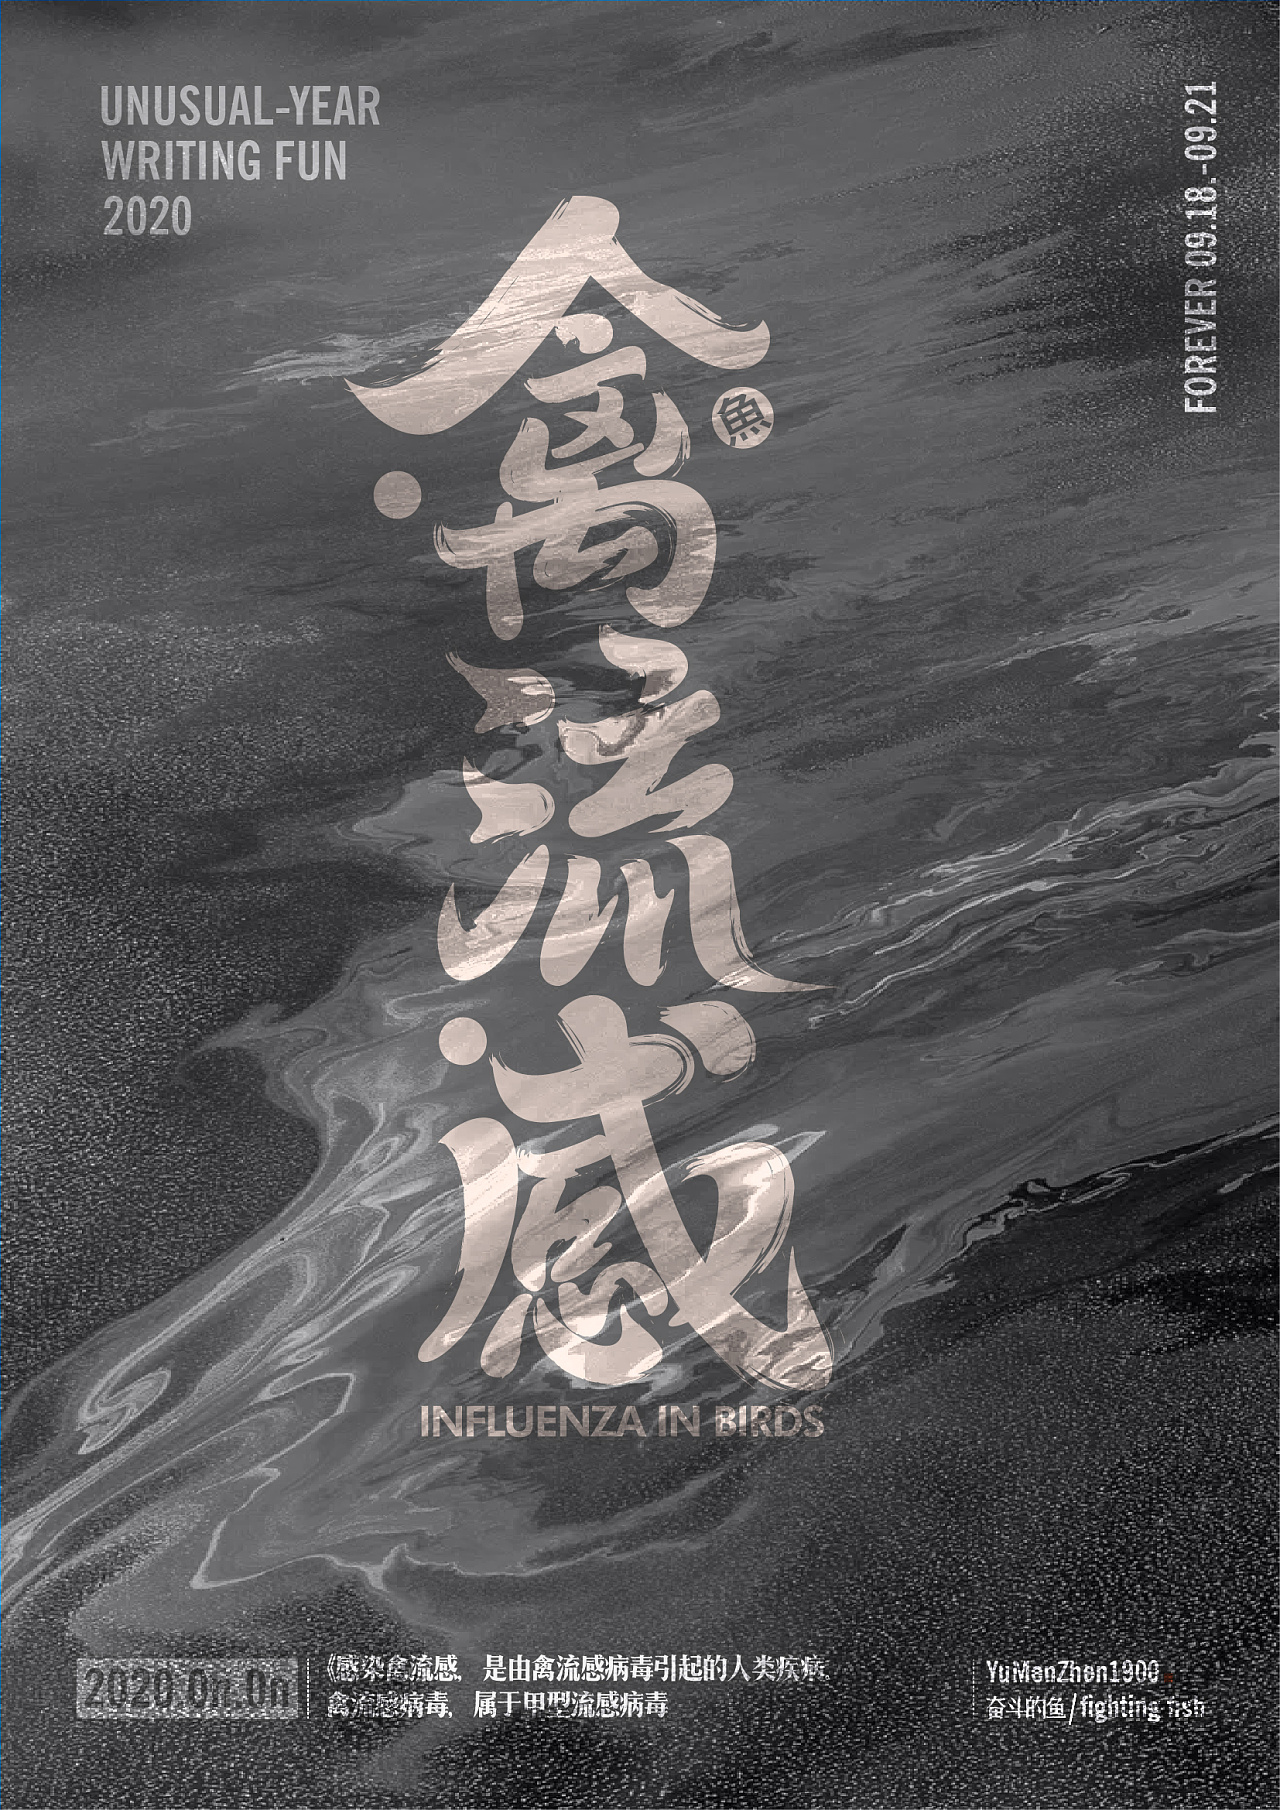 adobe illustrator chinese fonts